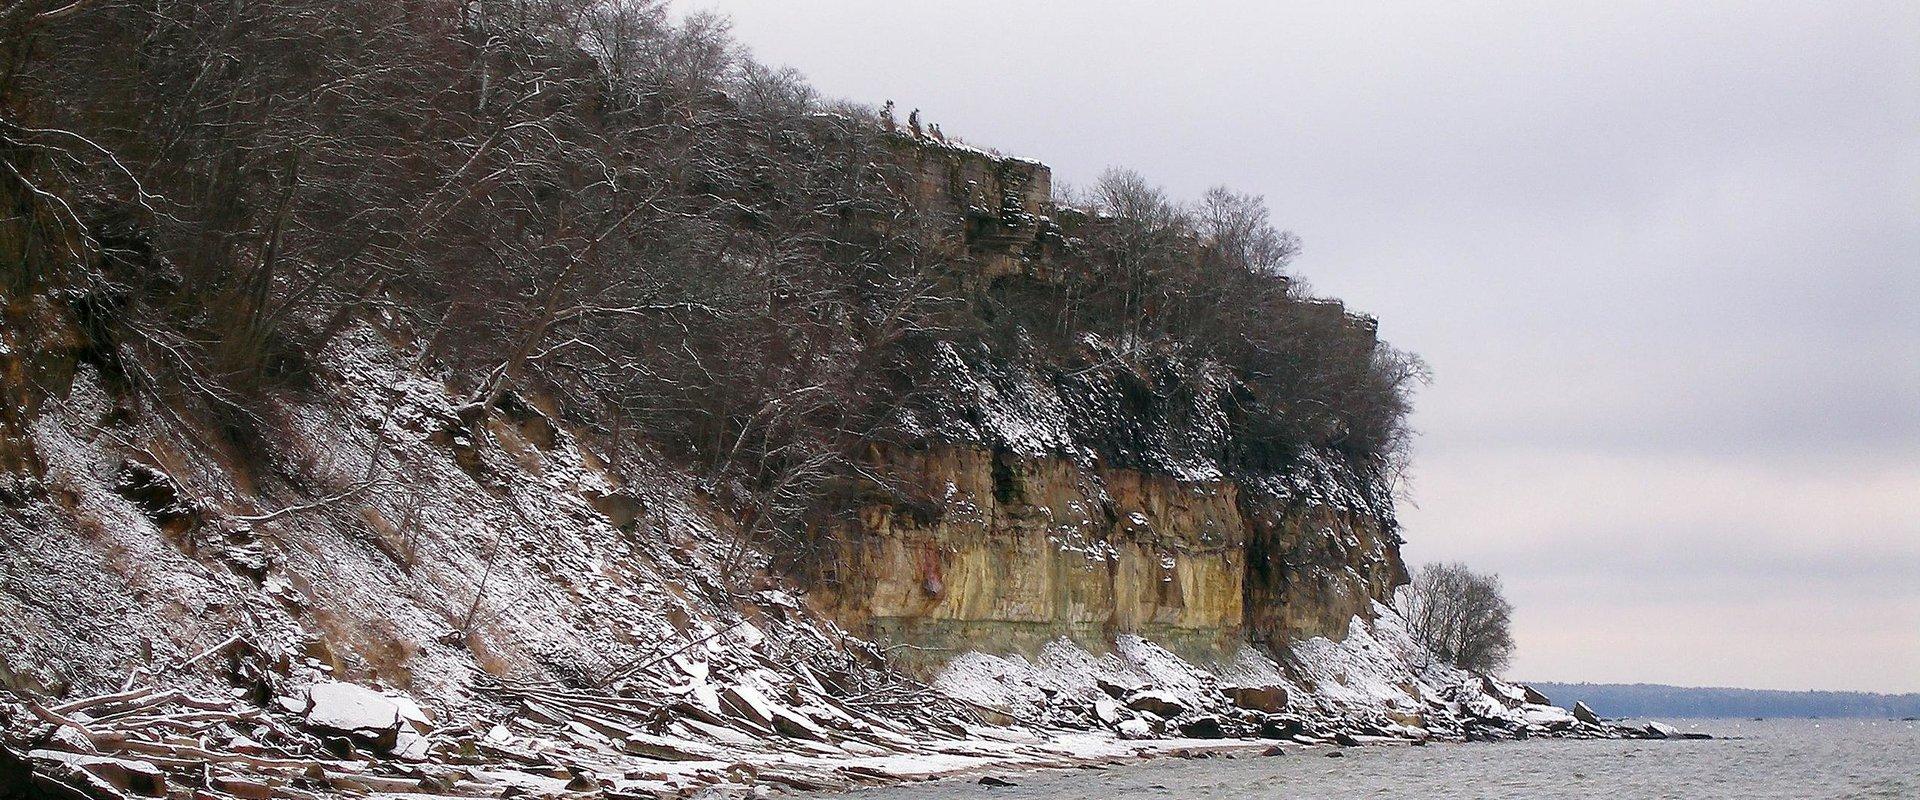 Türisalu limestone cliff and platform